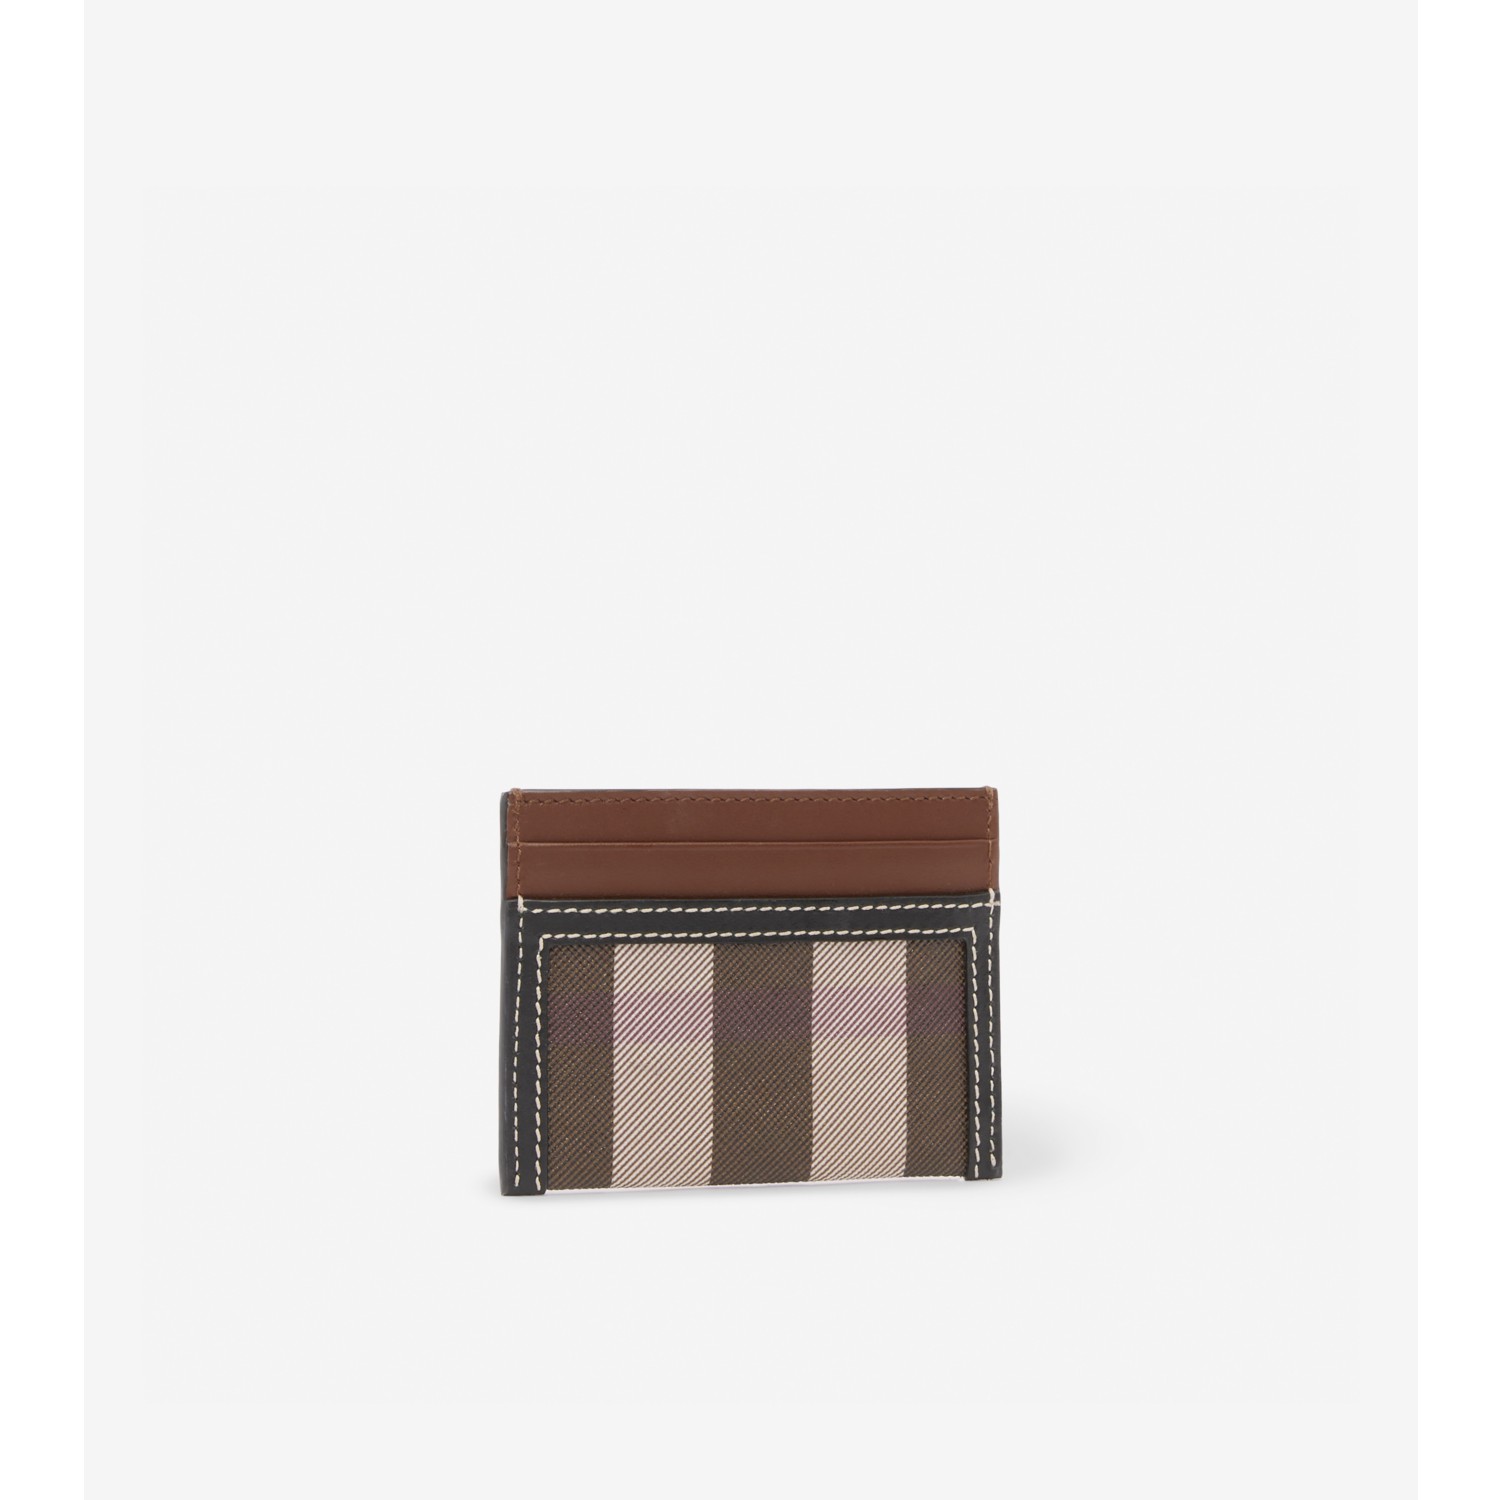 Louis Vuitton Small bags, wallets & cases for Men - Vestiaire Collective